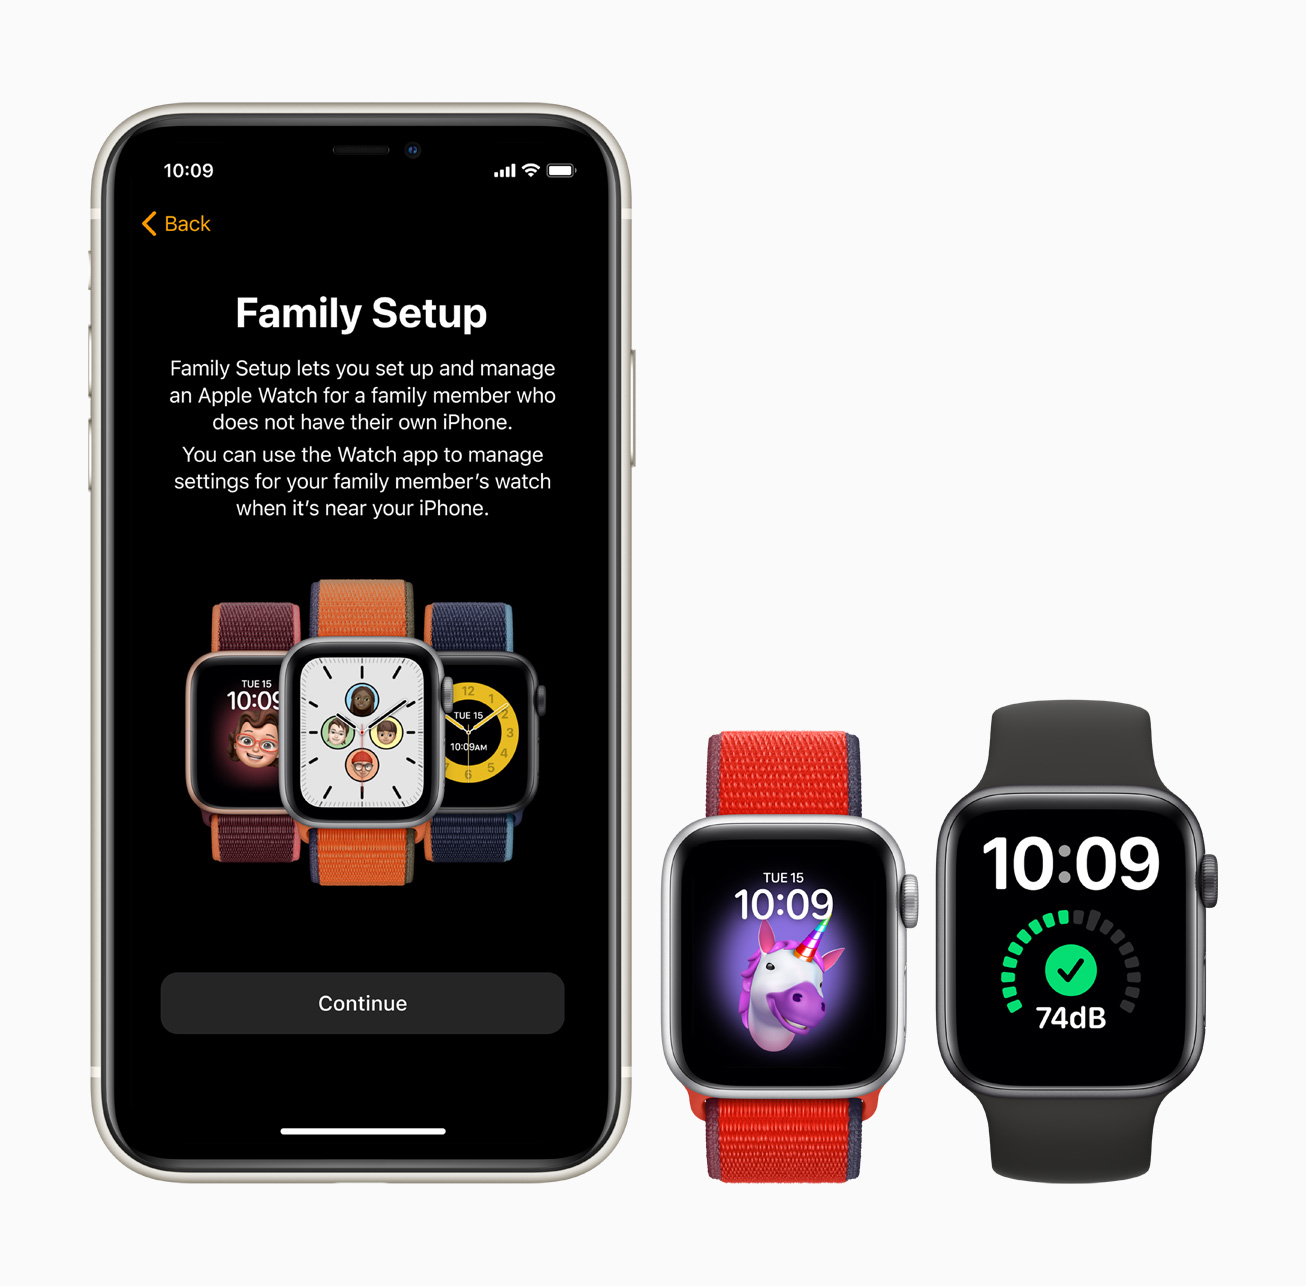 Apple watch family setup iphone11 screen 09152020